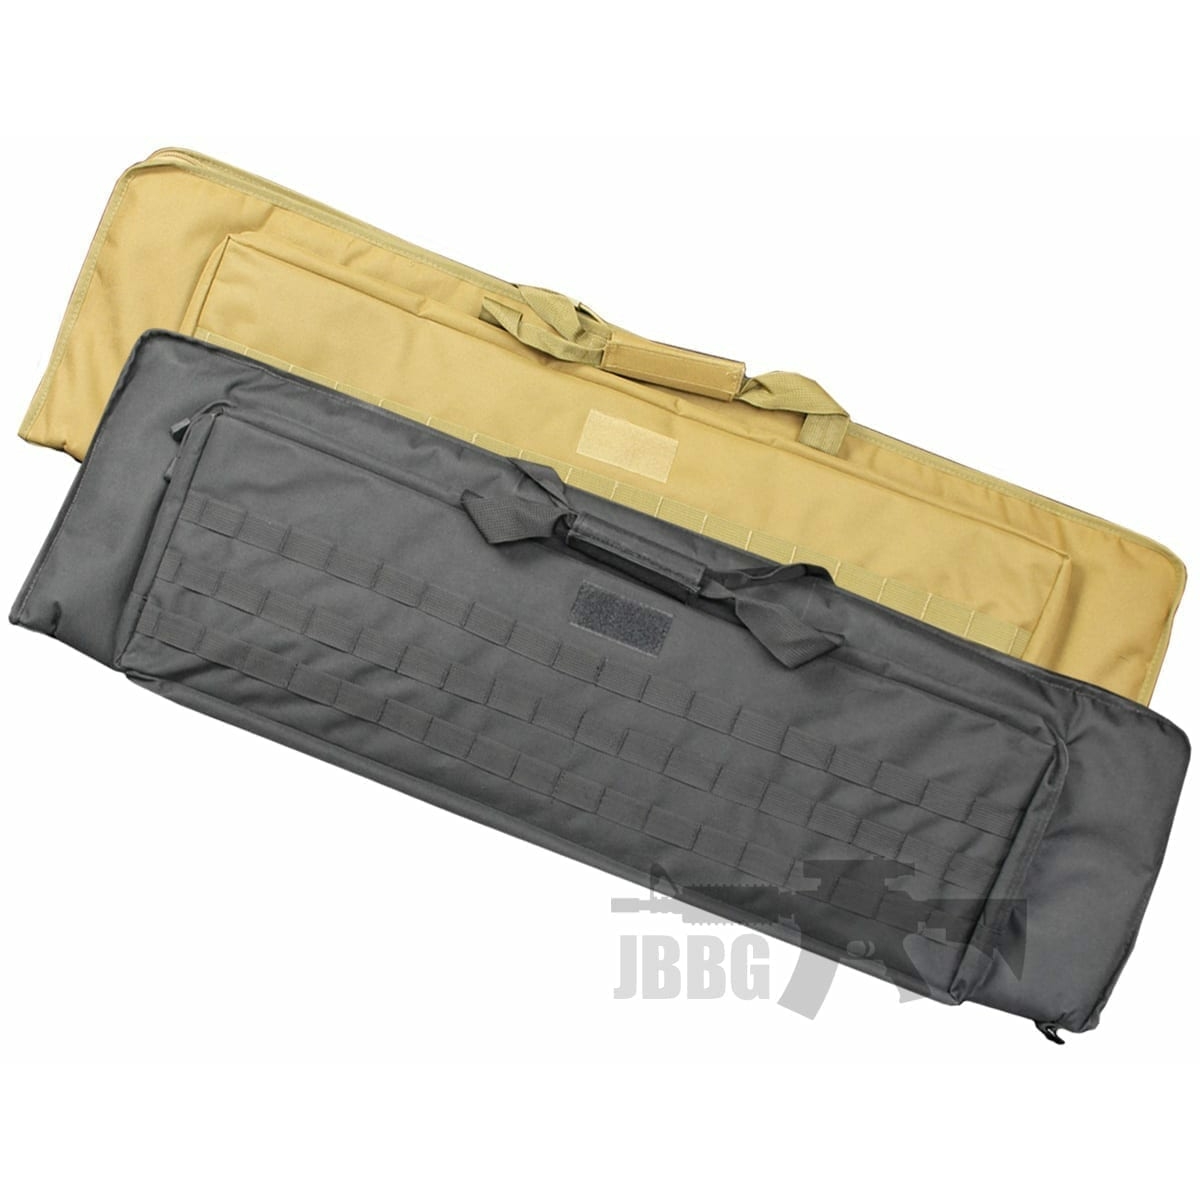 GB01 M4 Functional Bag (100CM) - Just BB Guns Ireland